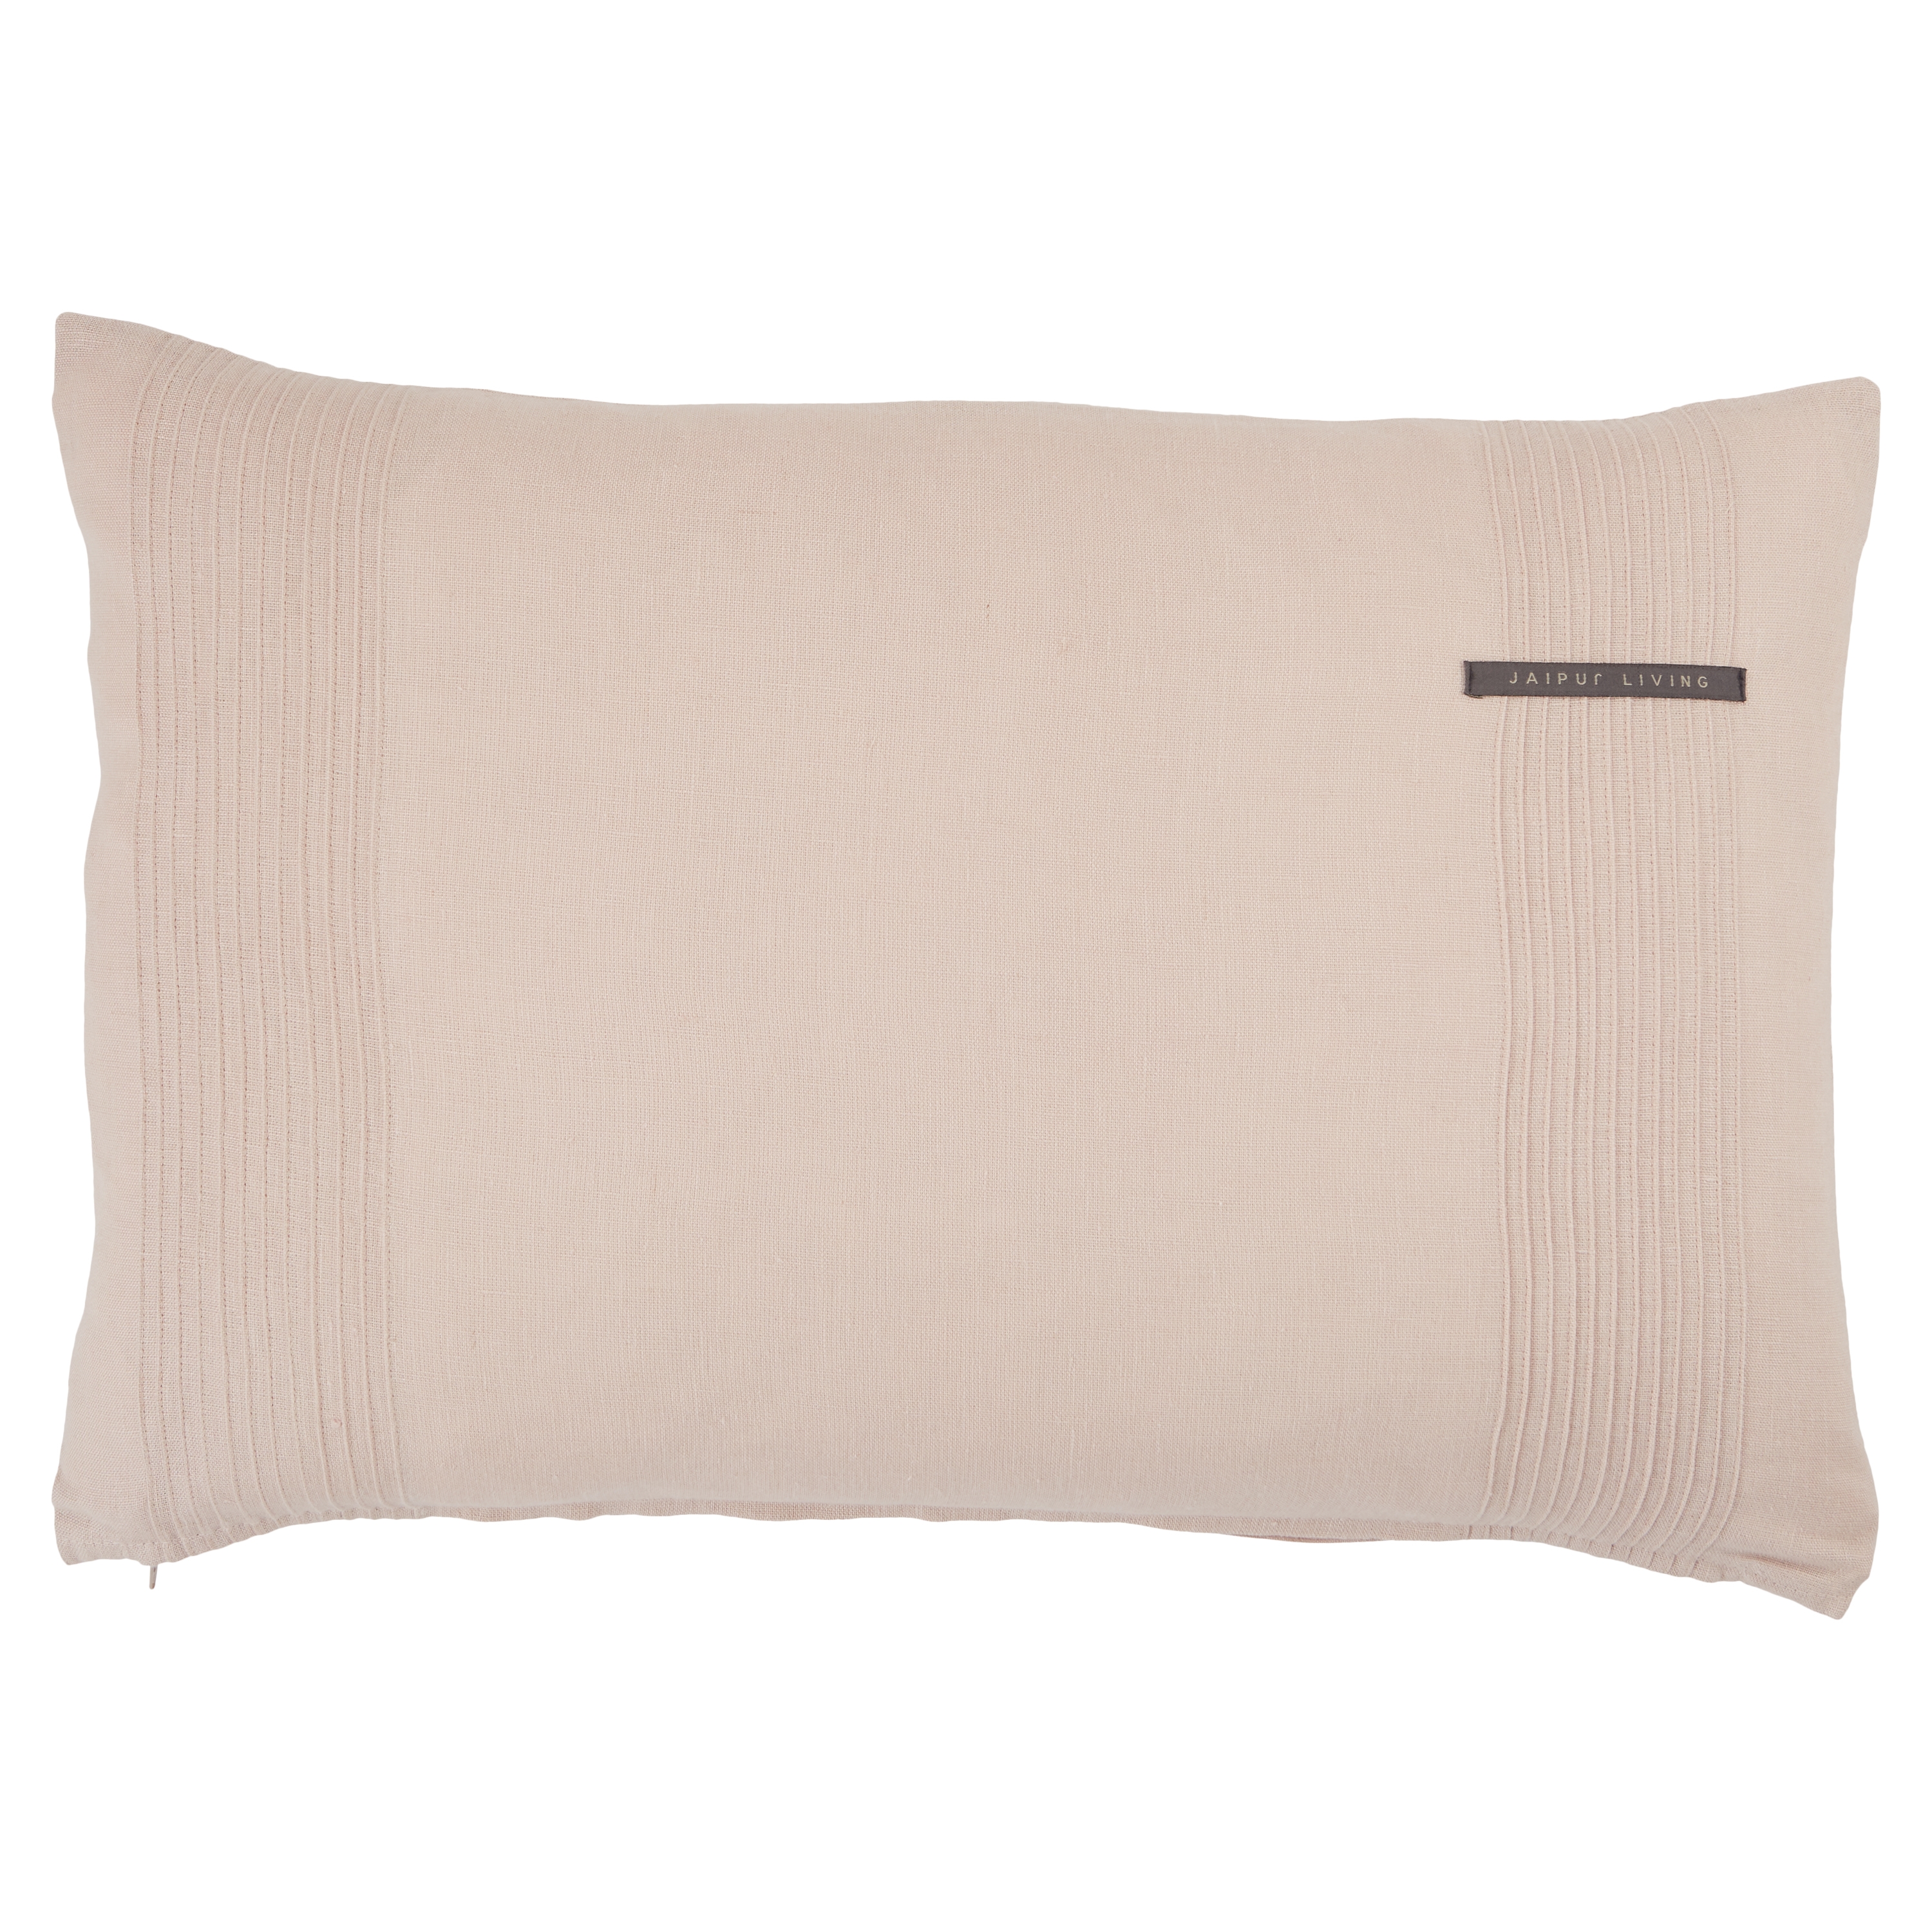 Design (US) Blush 16"X24" Pillow - Image 1